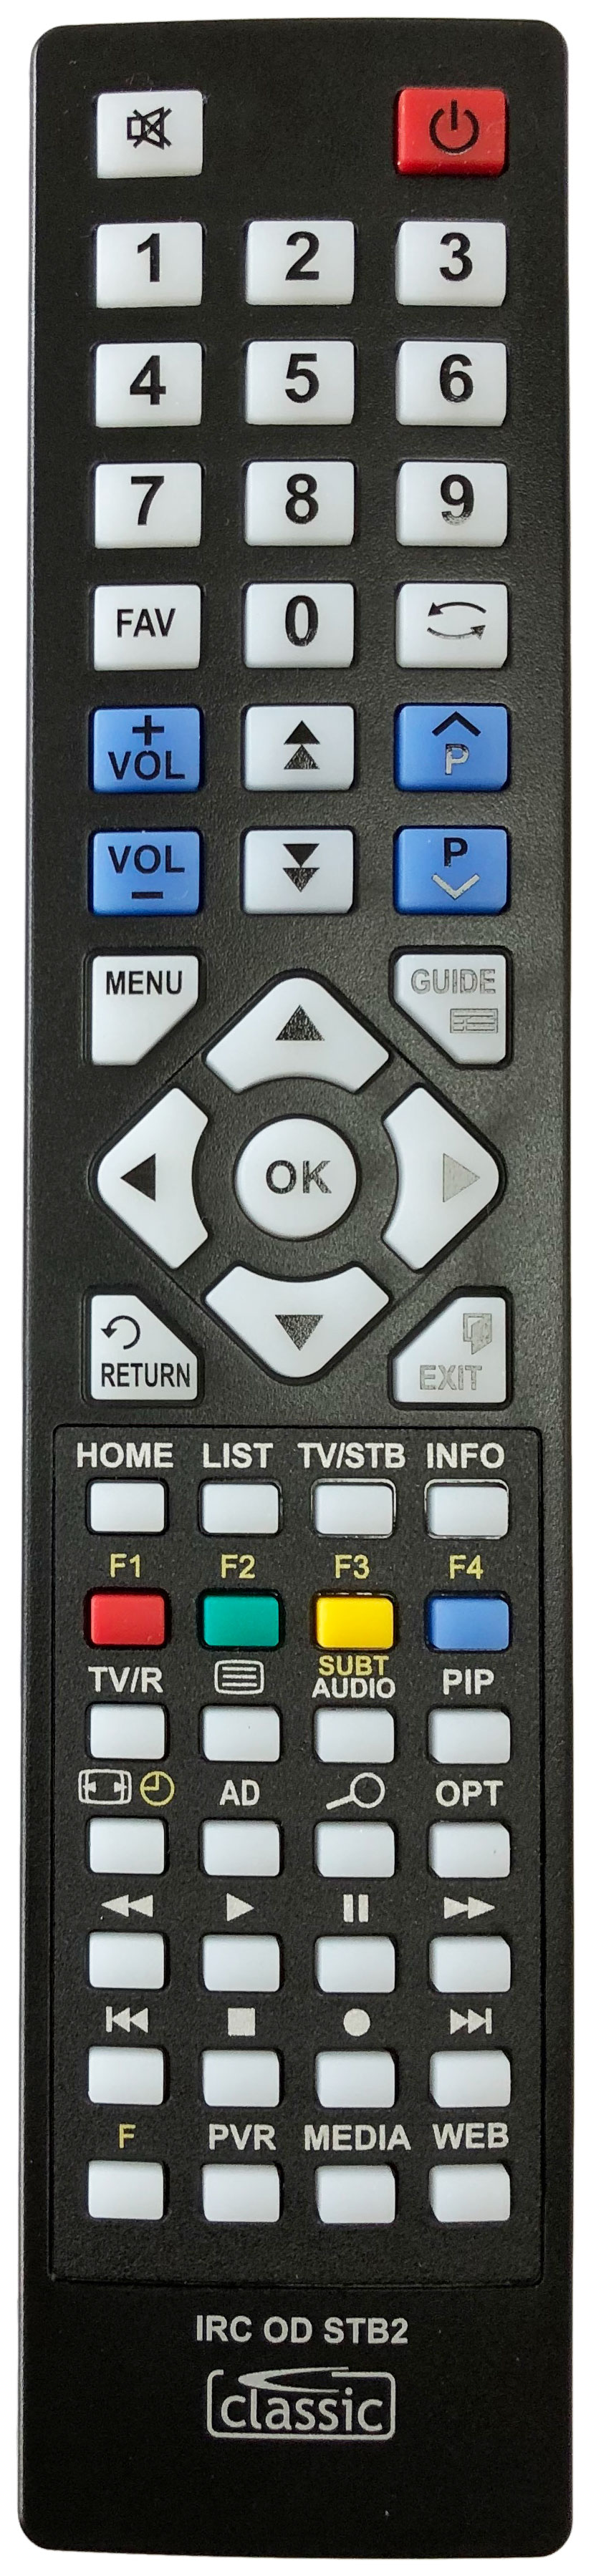 Durabrand CG5660-M Remote Control